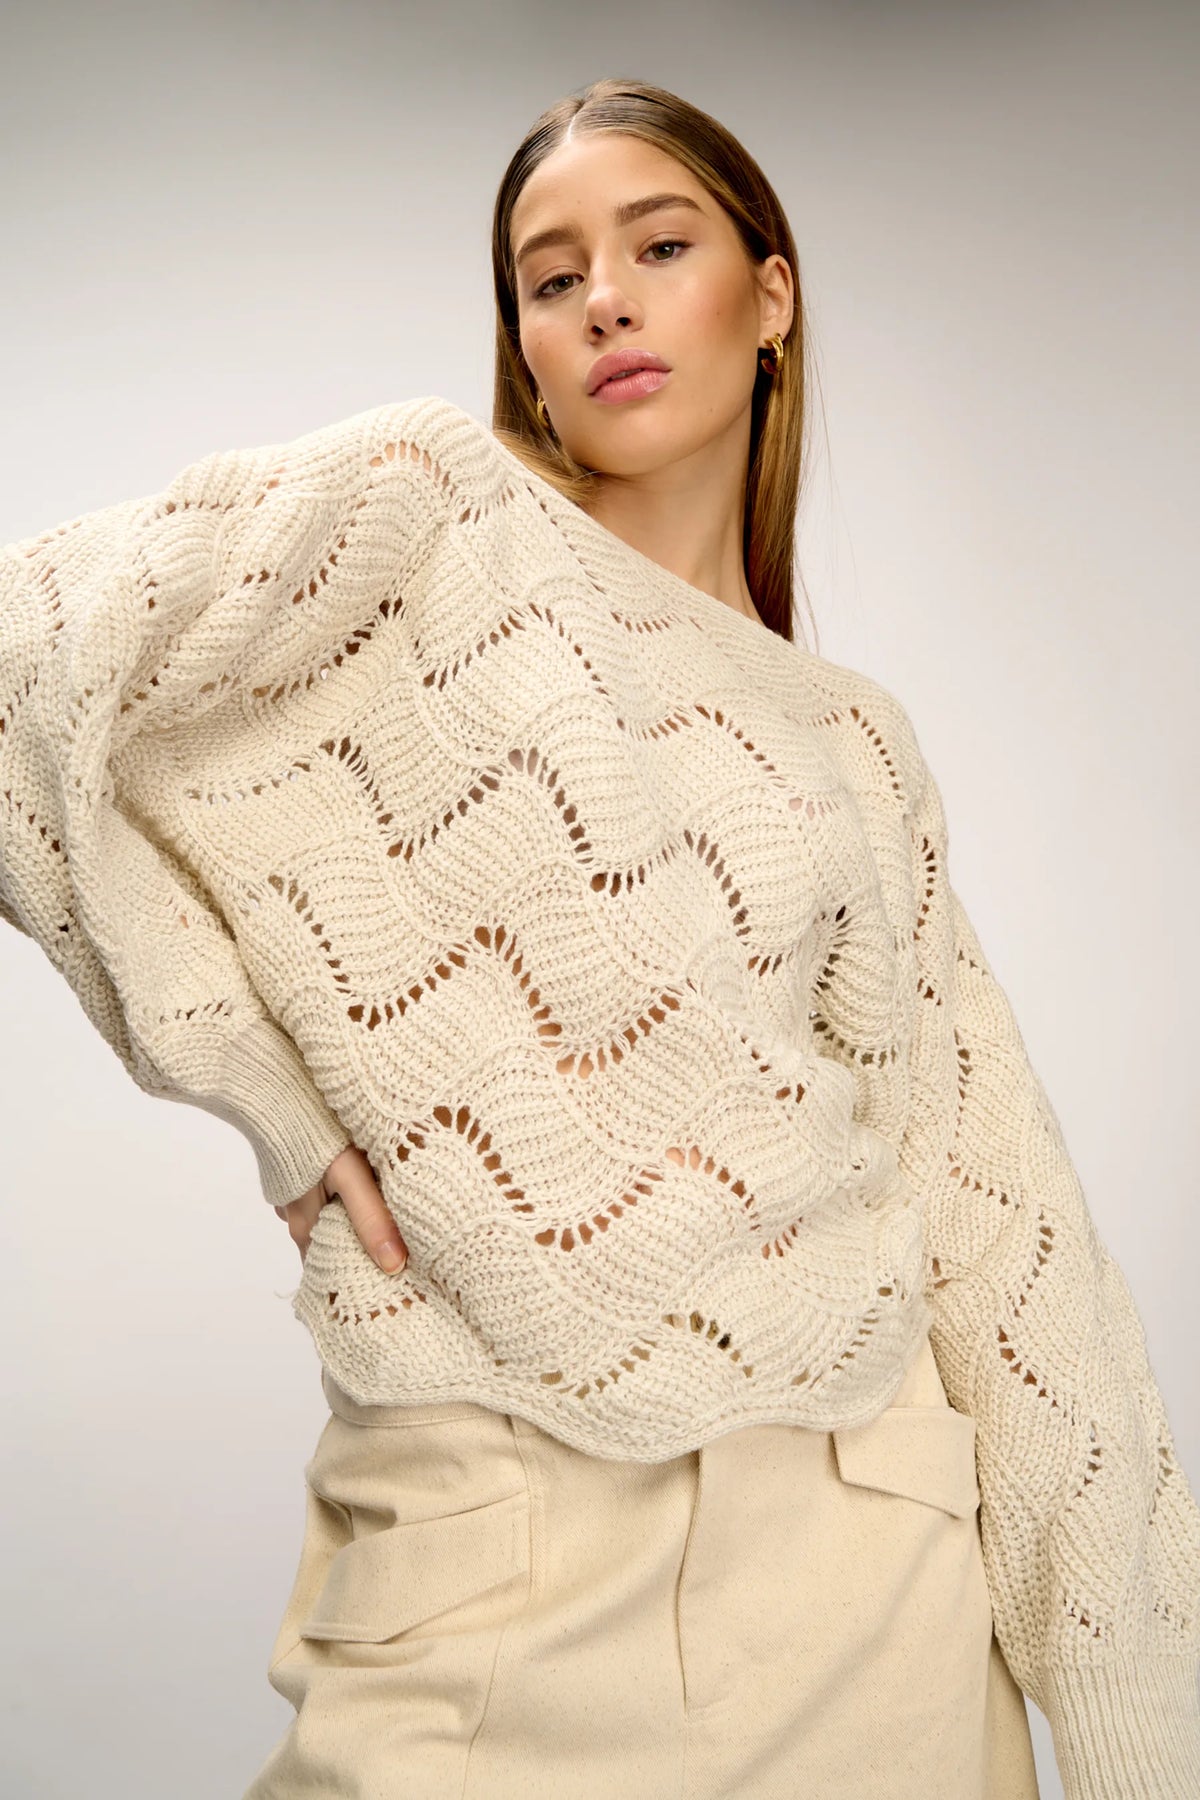 Taffy Knit Sweater - Sand